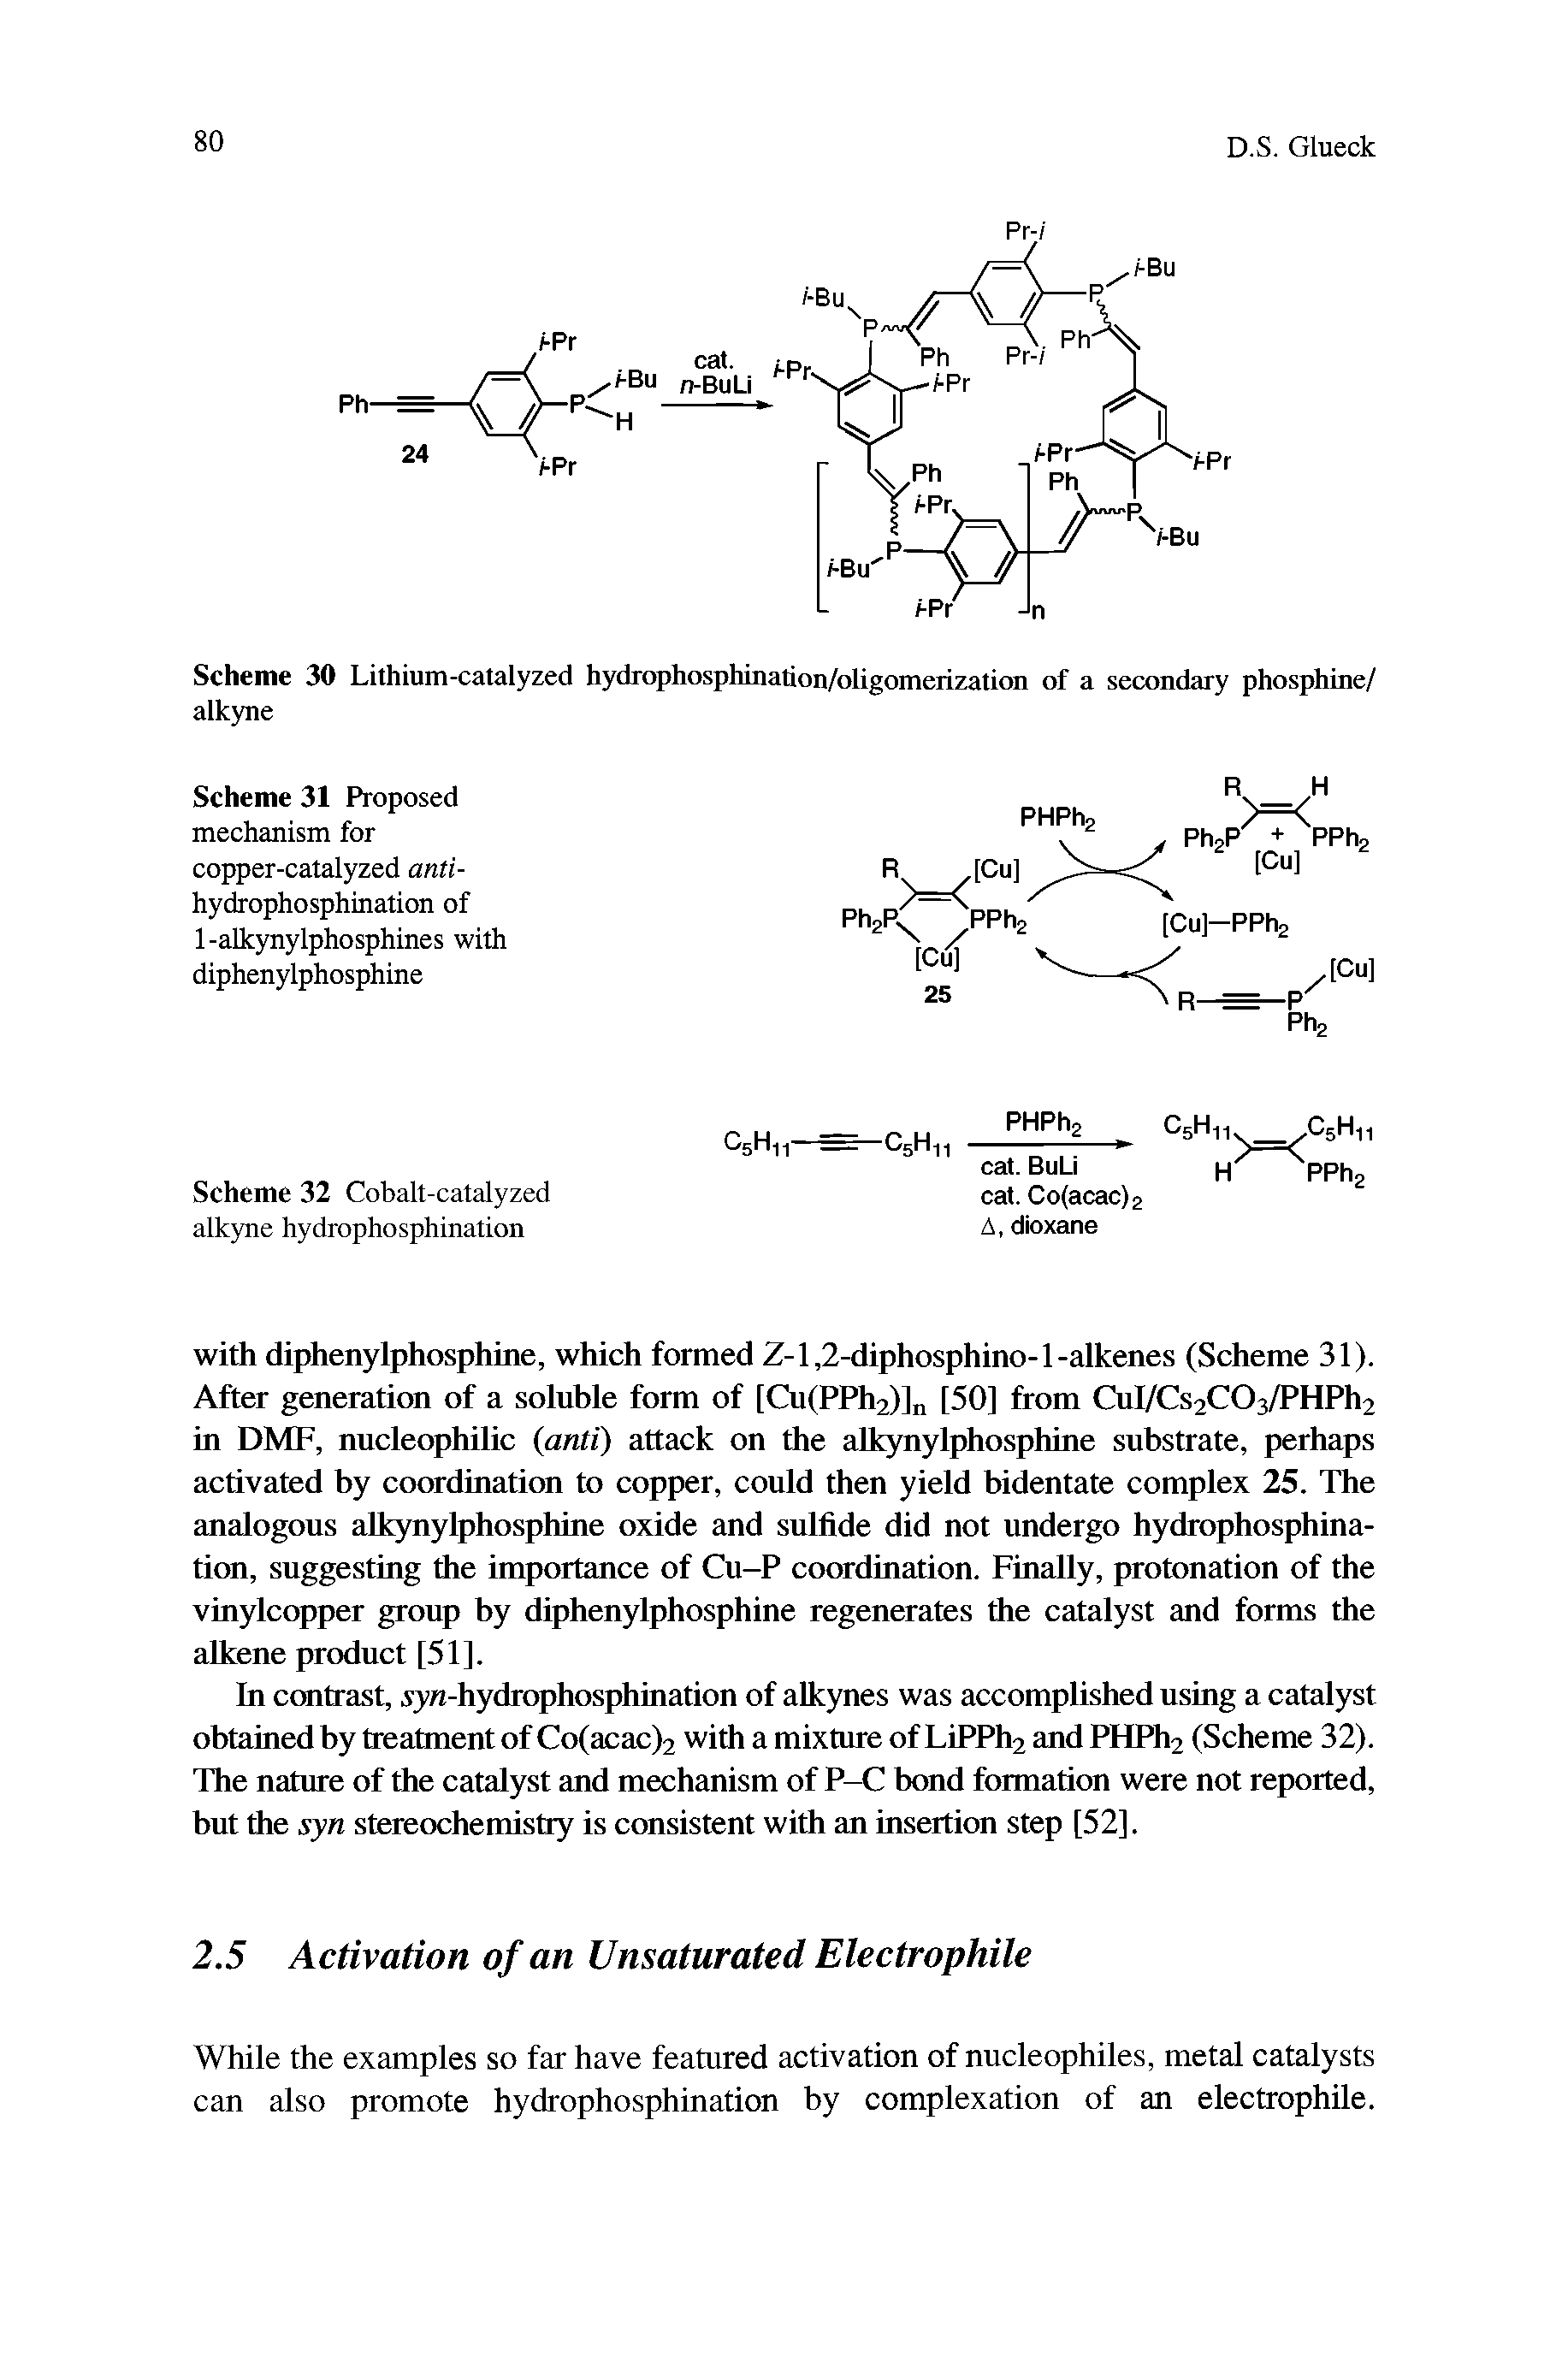 Scheme 30 Lithium-catalyzed hydrophosphination/oligomerization of a secondary phosphine/ alkyne...